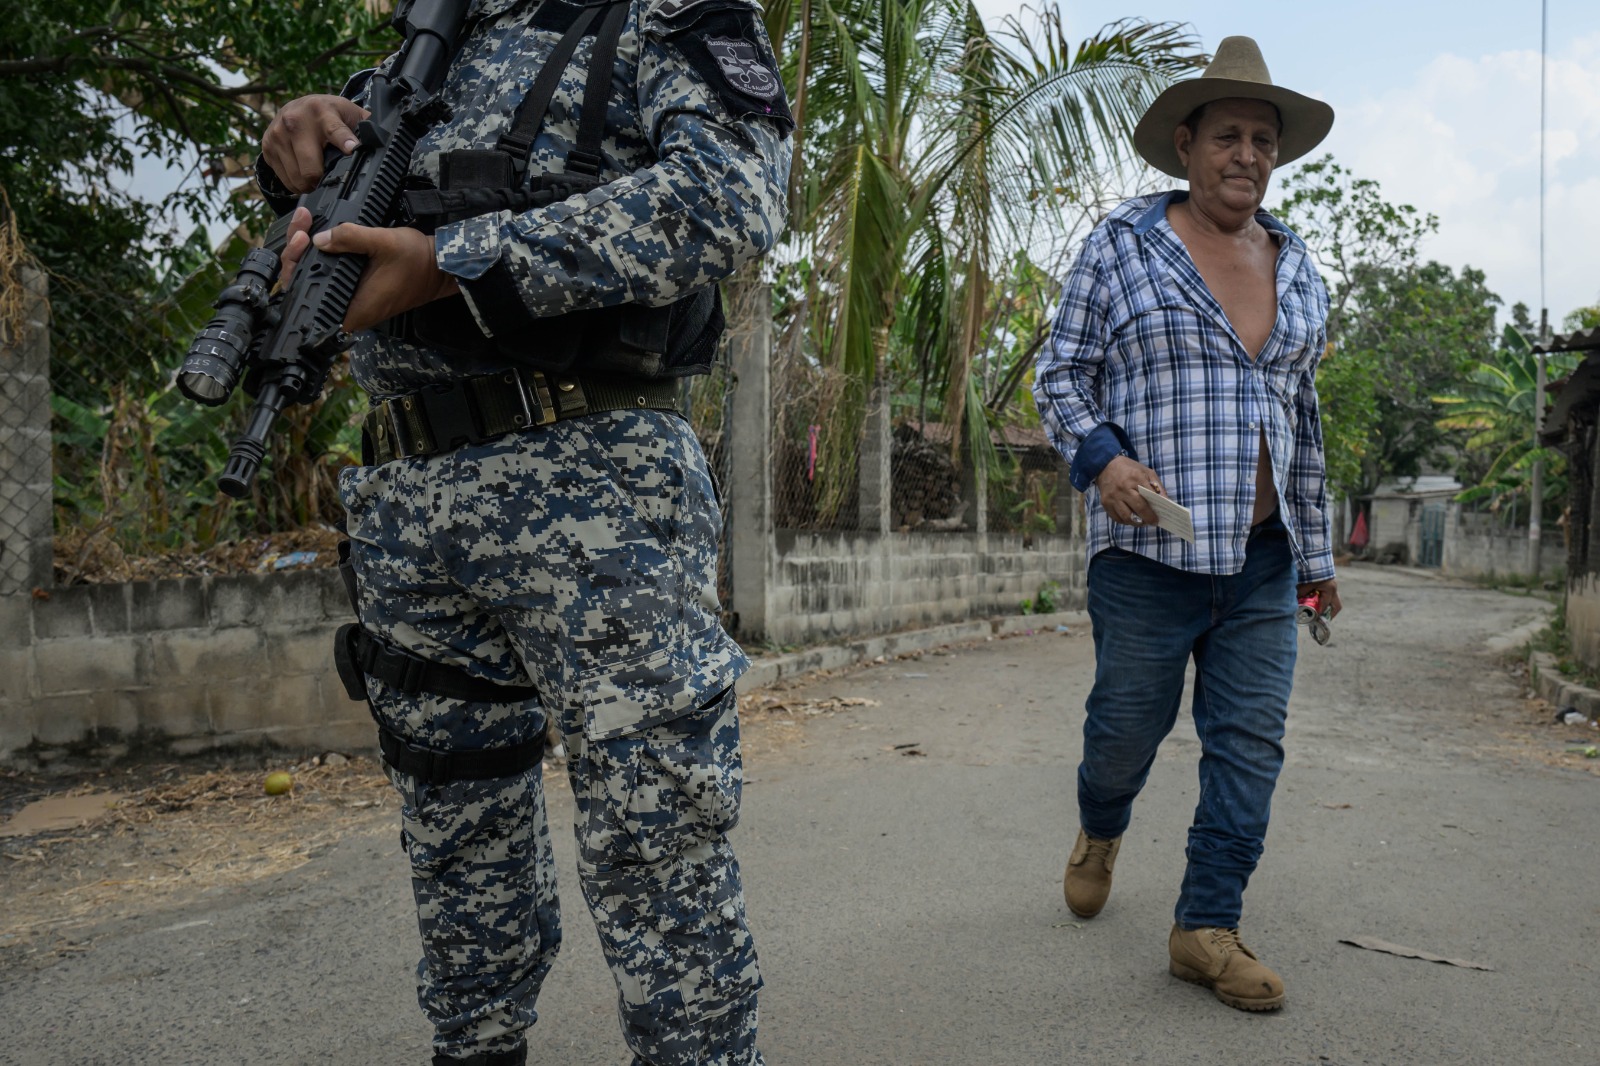 El Salvador: exception regime, instrument to criminalize community leaders